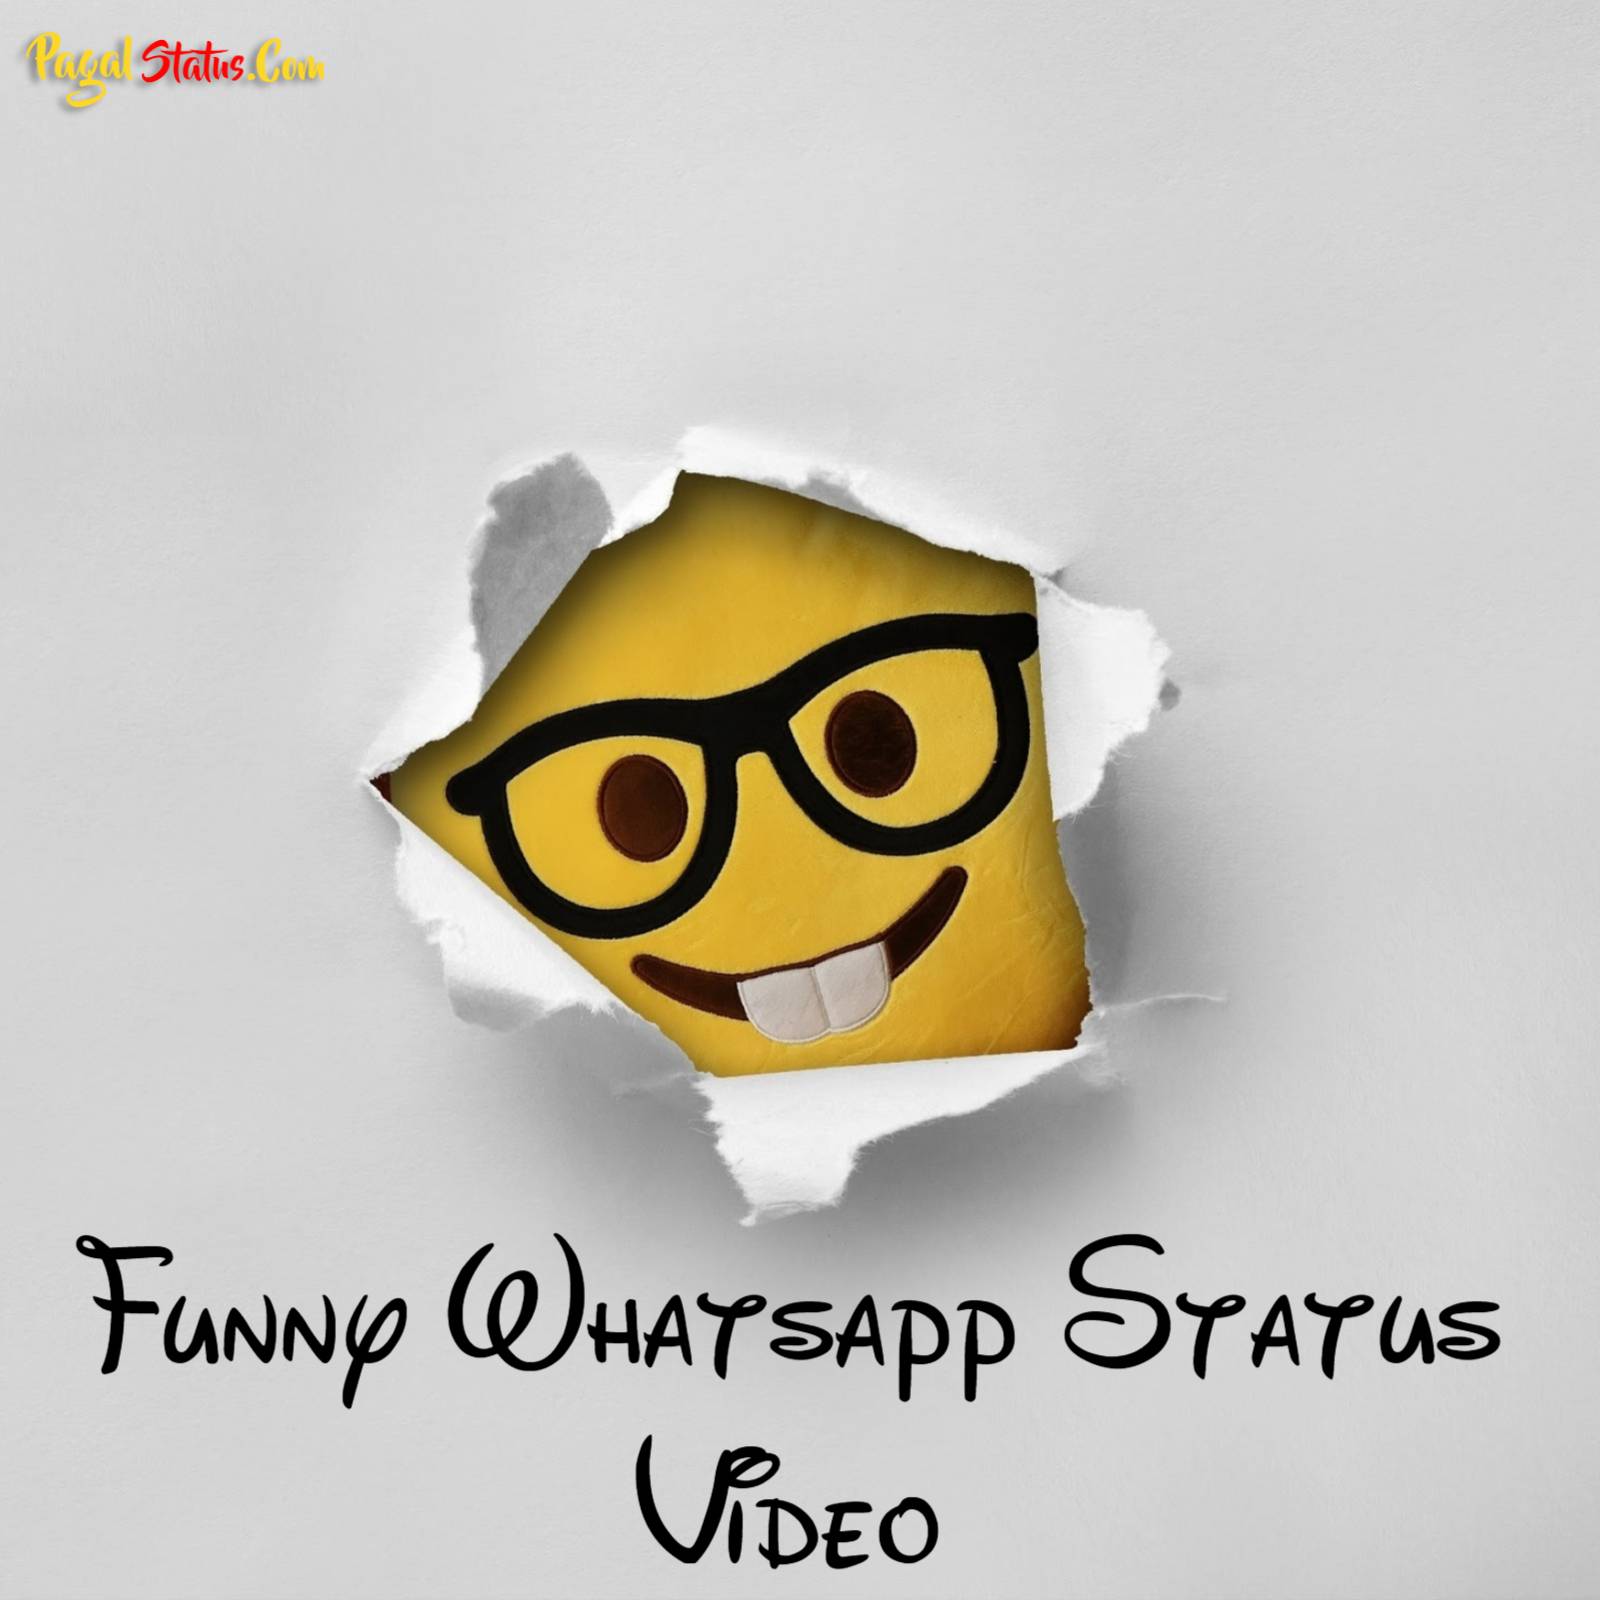 Funny Whatsapp Status Video